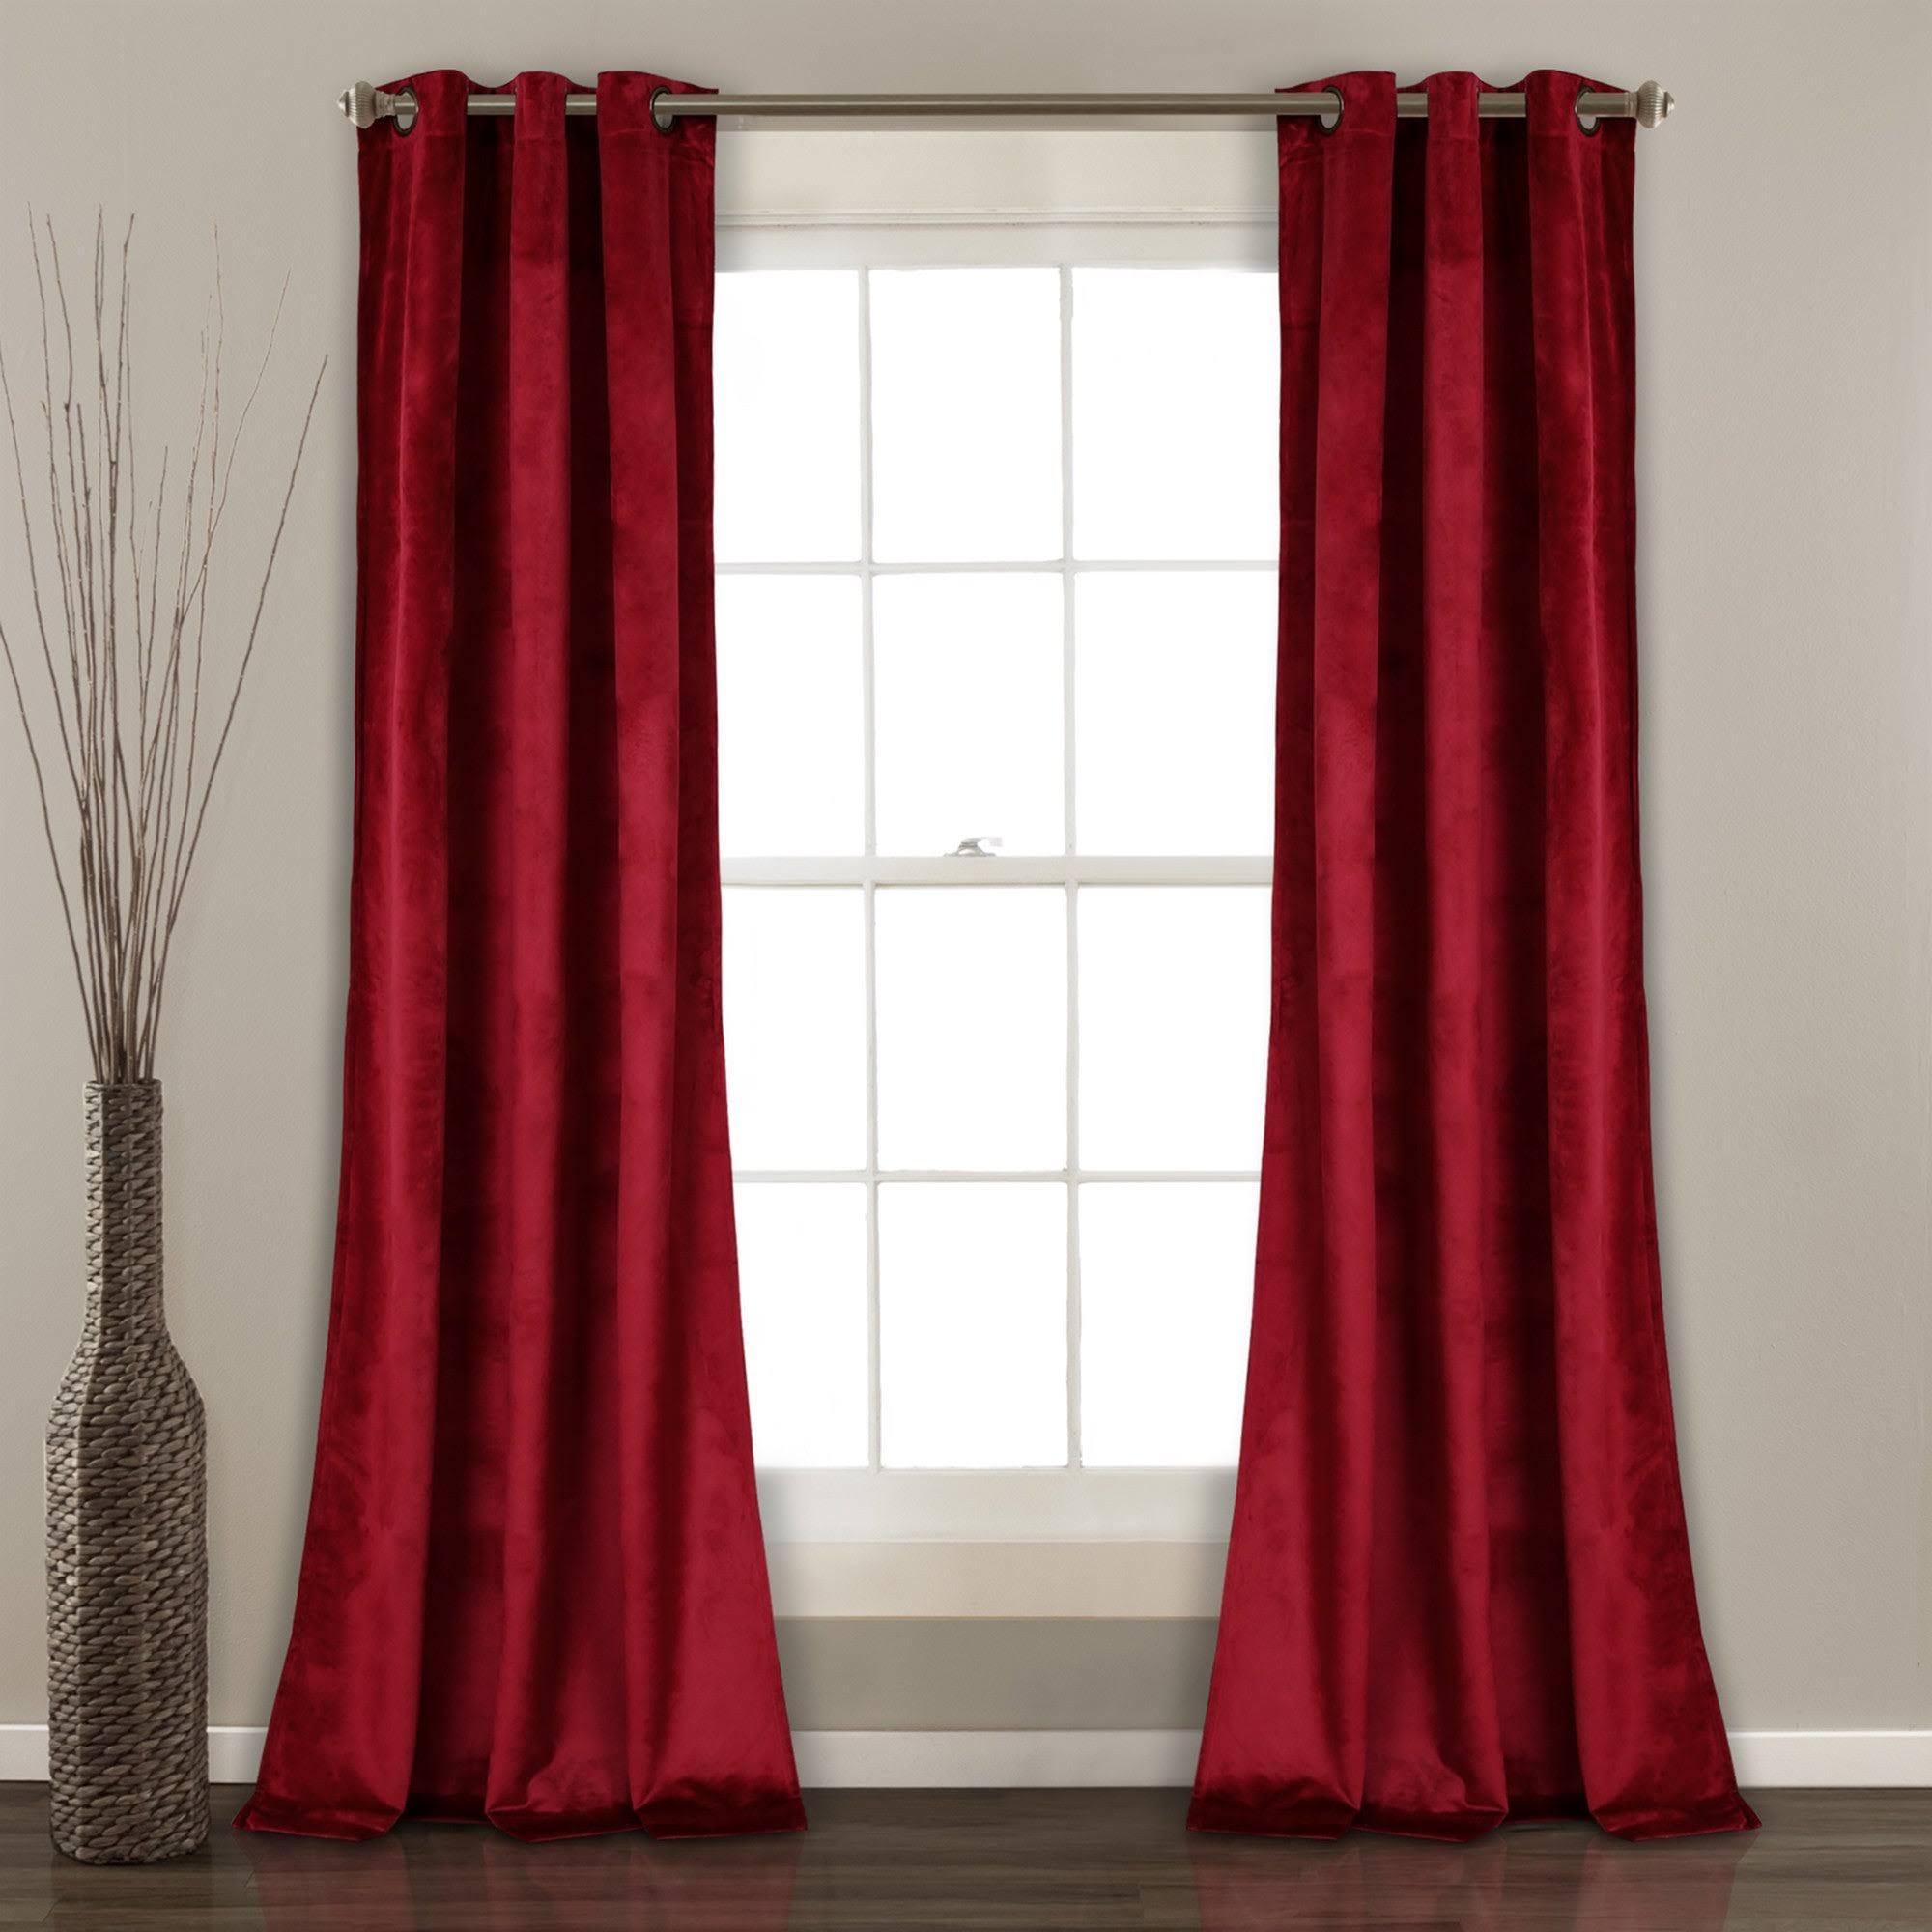 Lush Velvet Red Window Curtains: Room-Darkening and Luxurious | Image